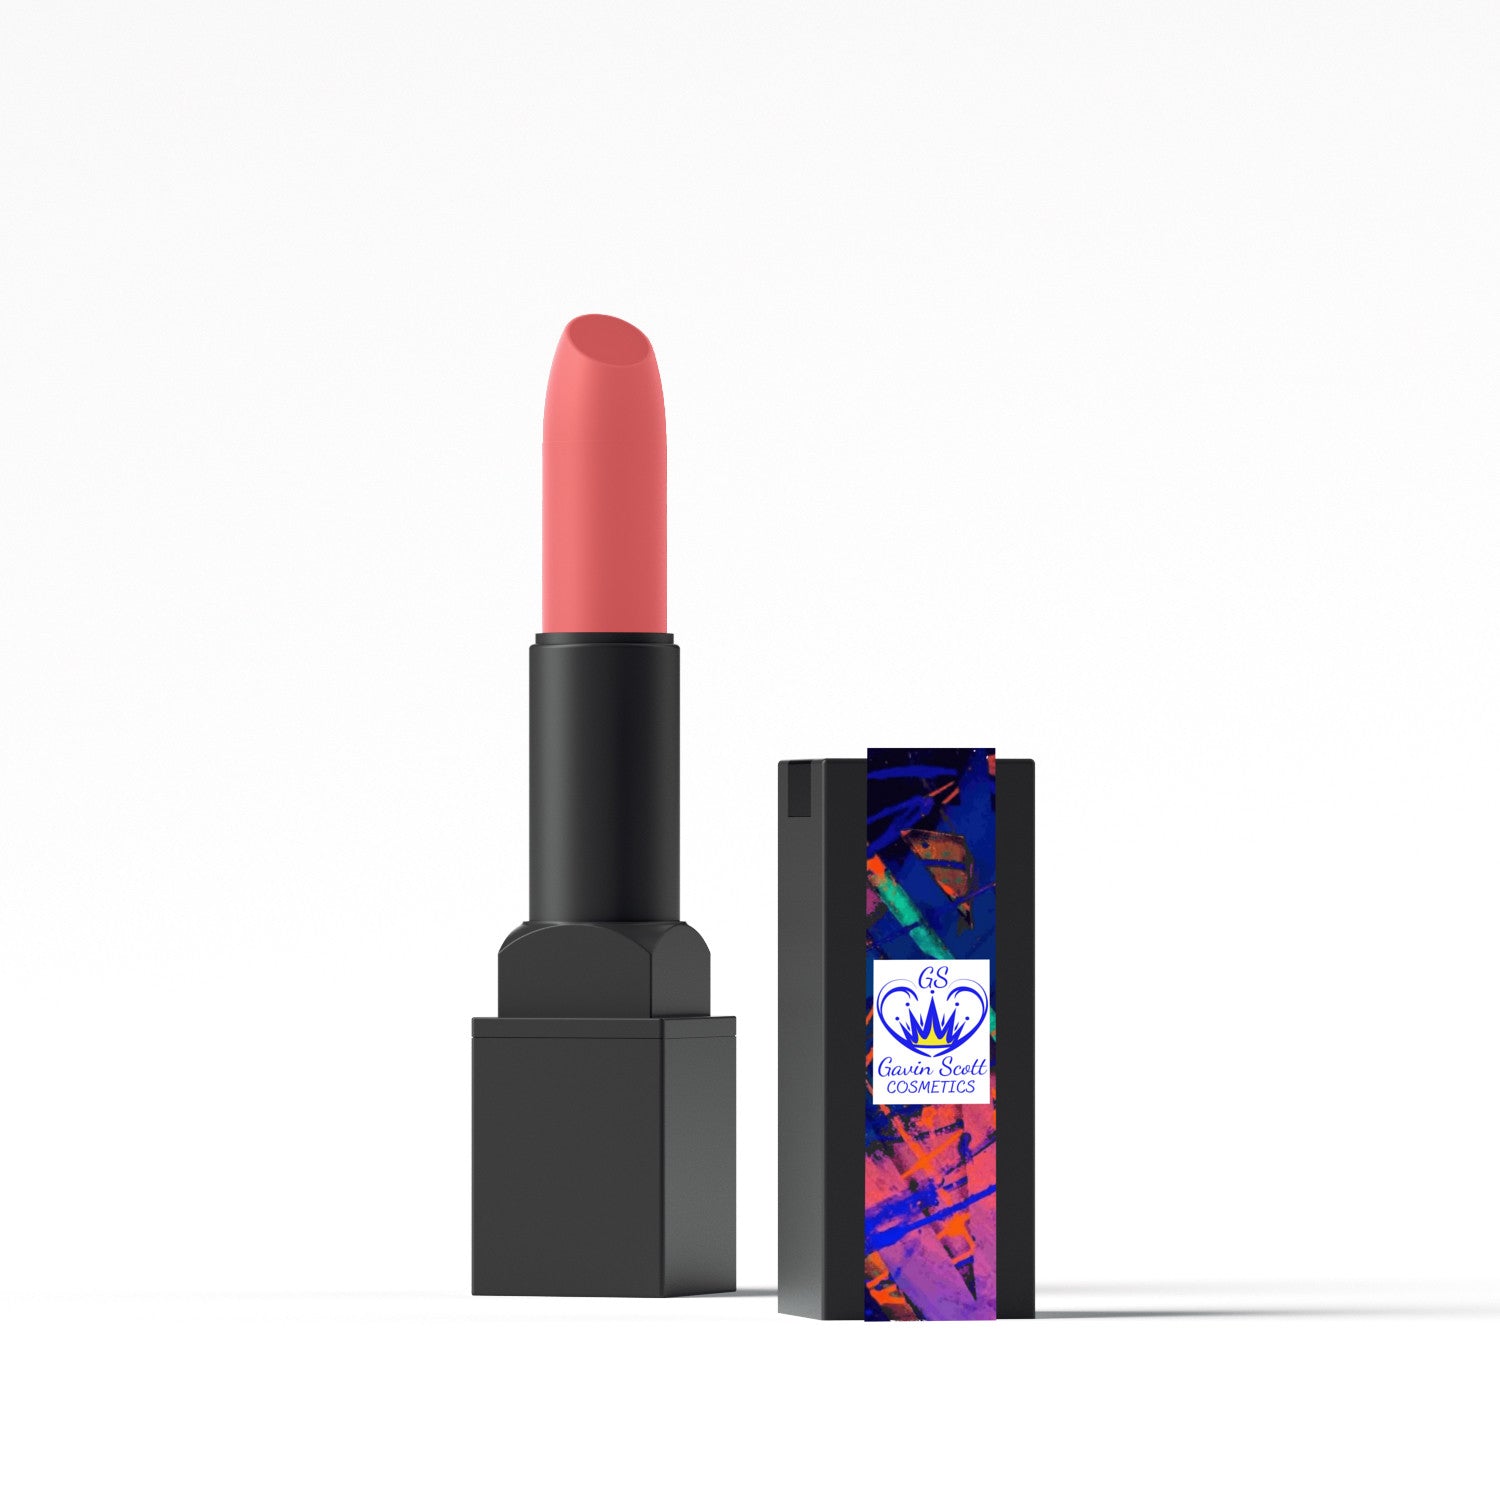 Lipstick-8201